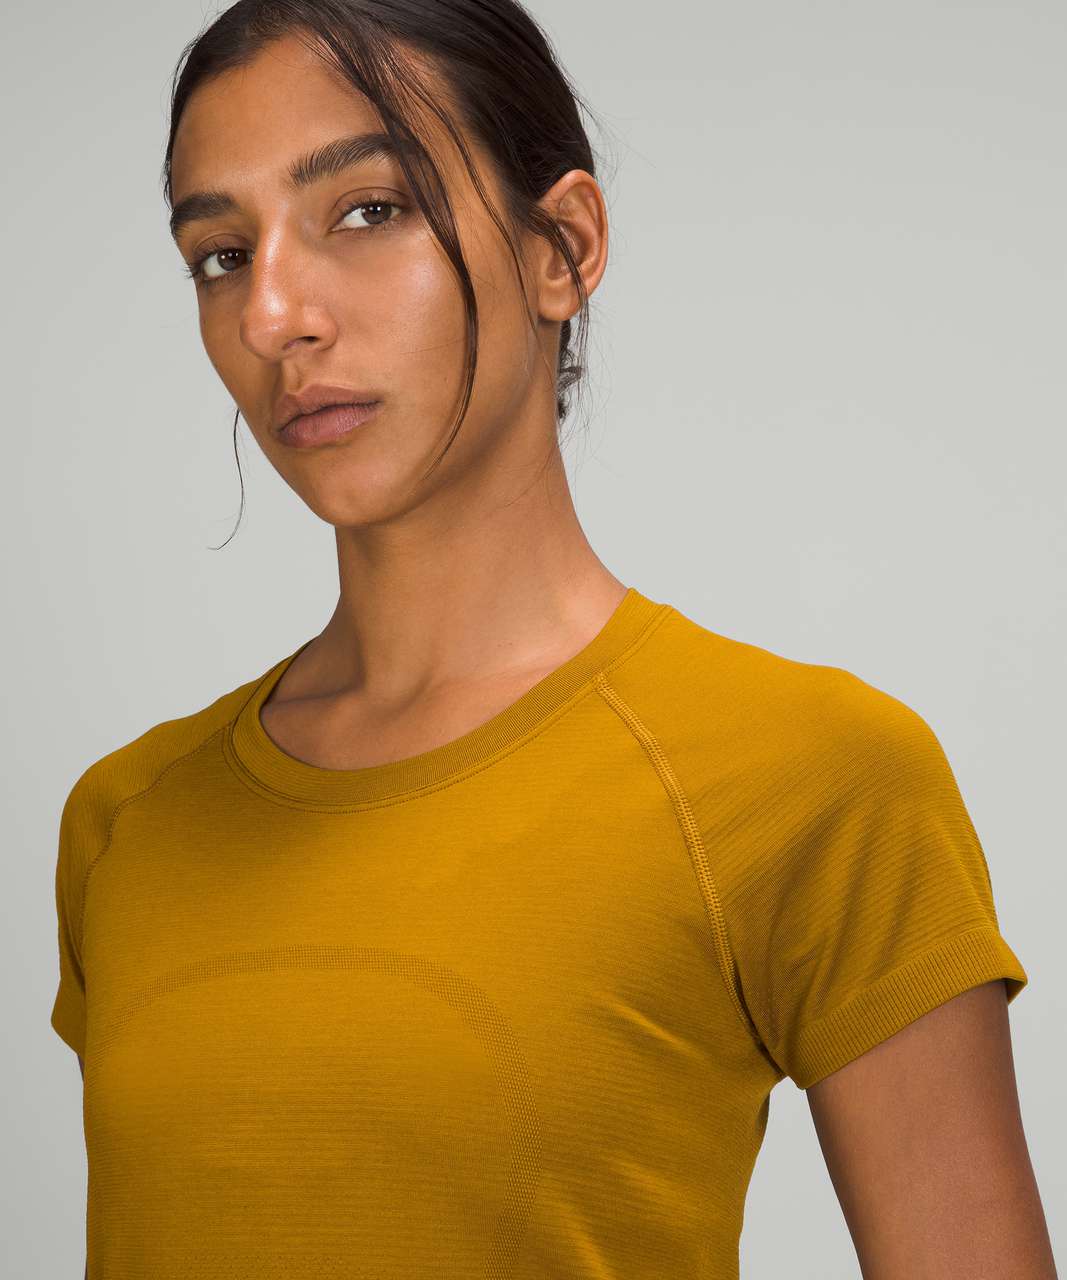 Lululemon Swiftly Tech Short Sleeve Shirt 2.0 *Race Length - Gold Spice / Gold Spice